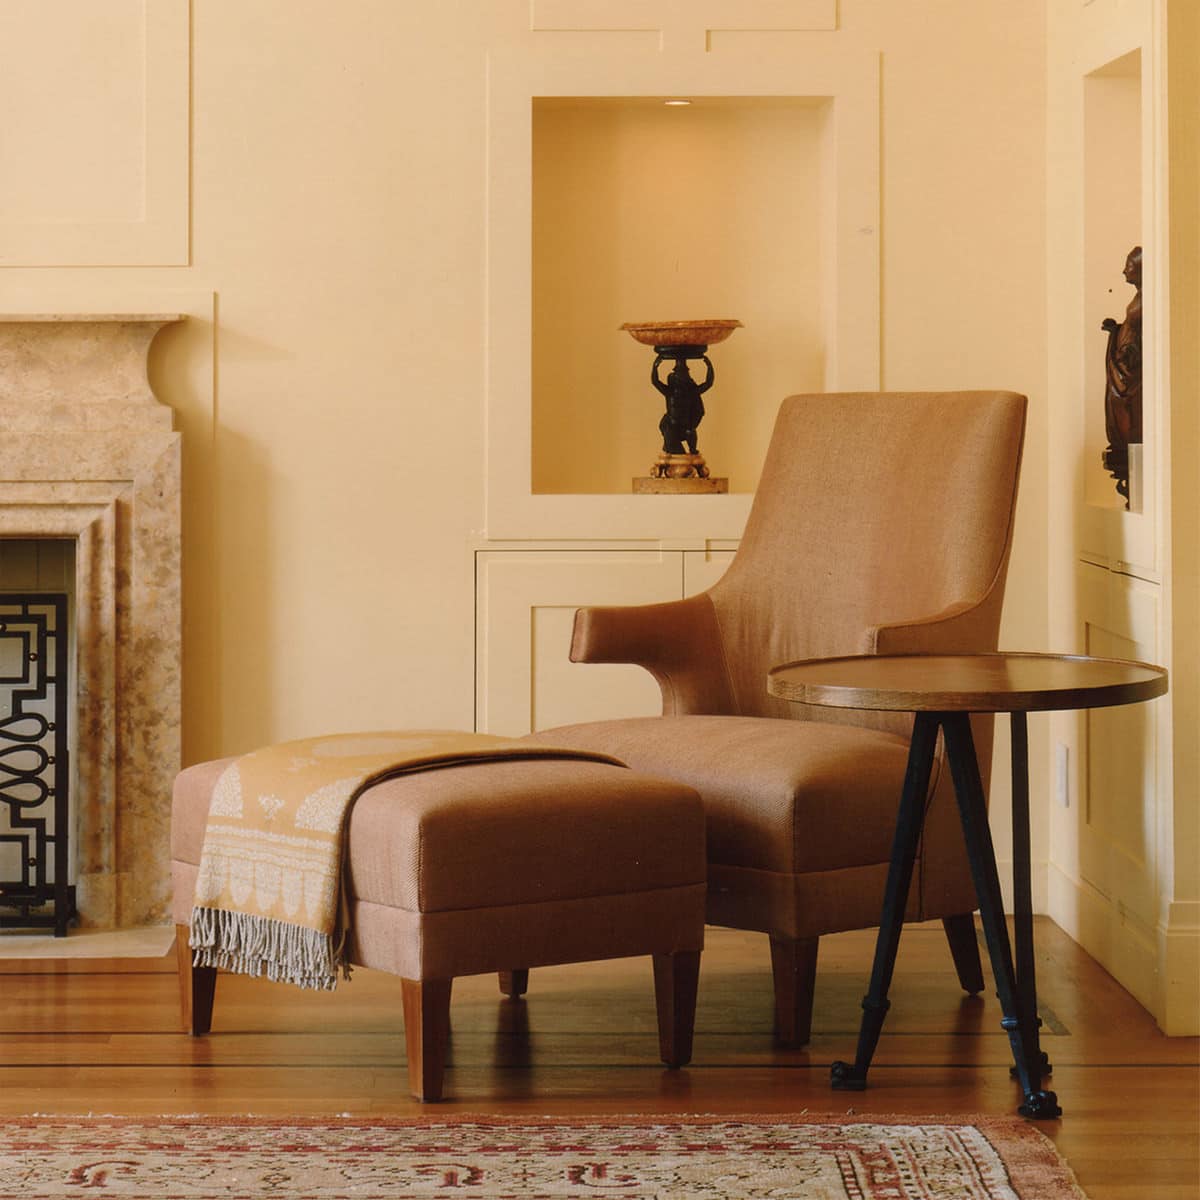 Custom chair | Rodman Paul Architects